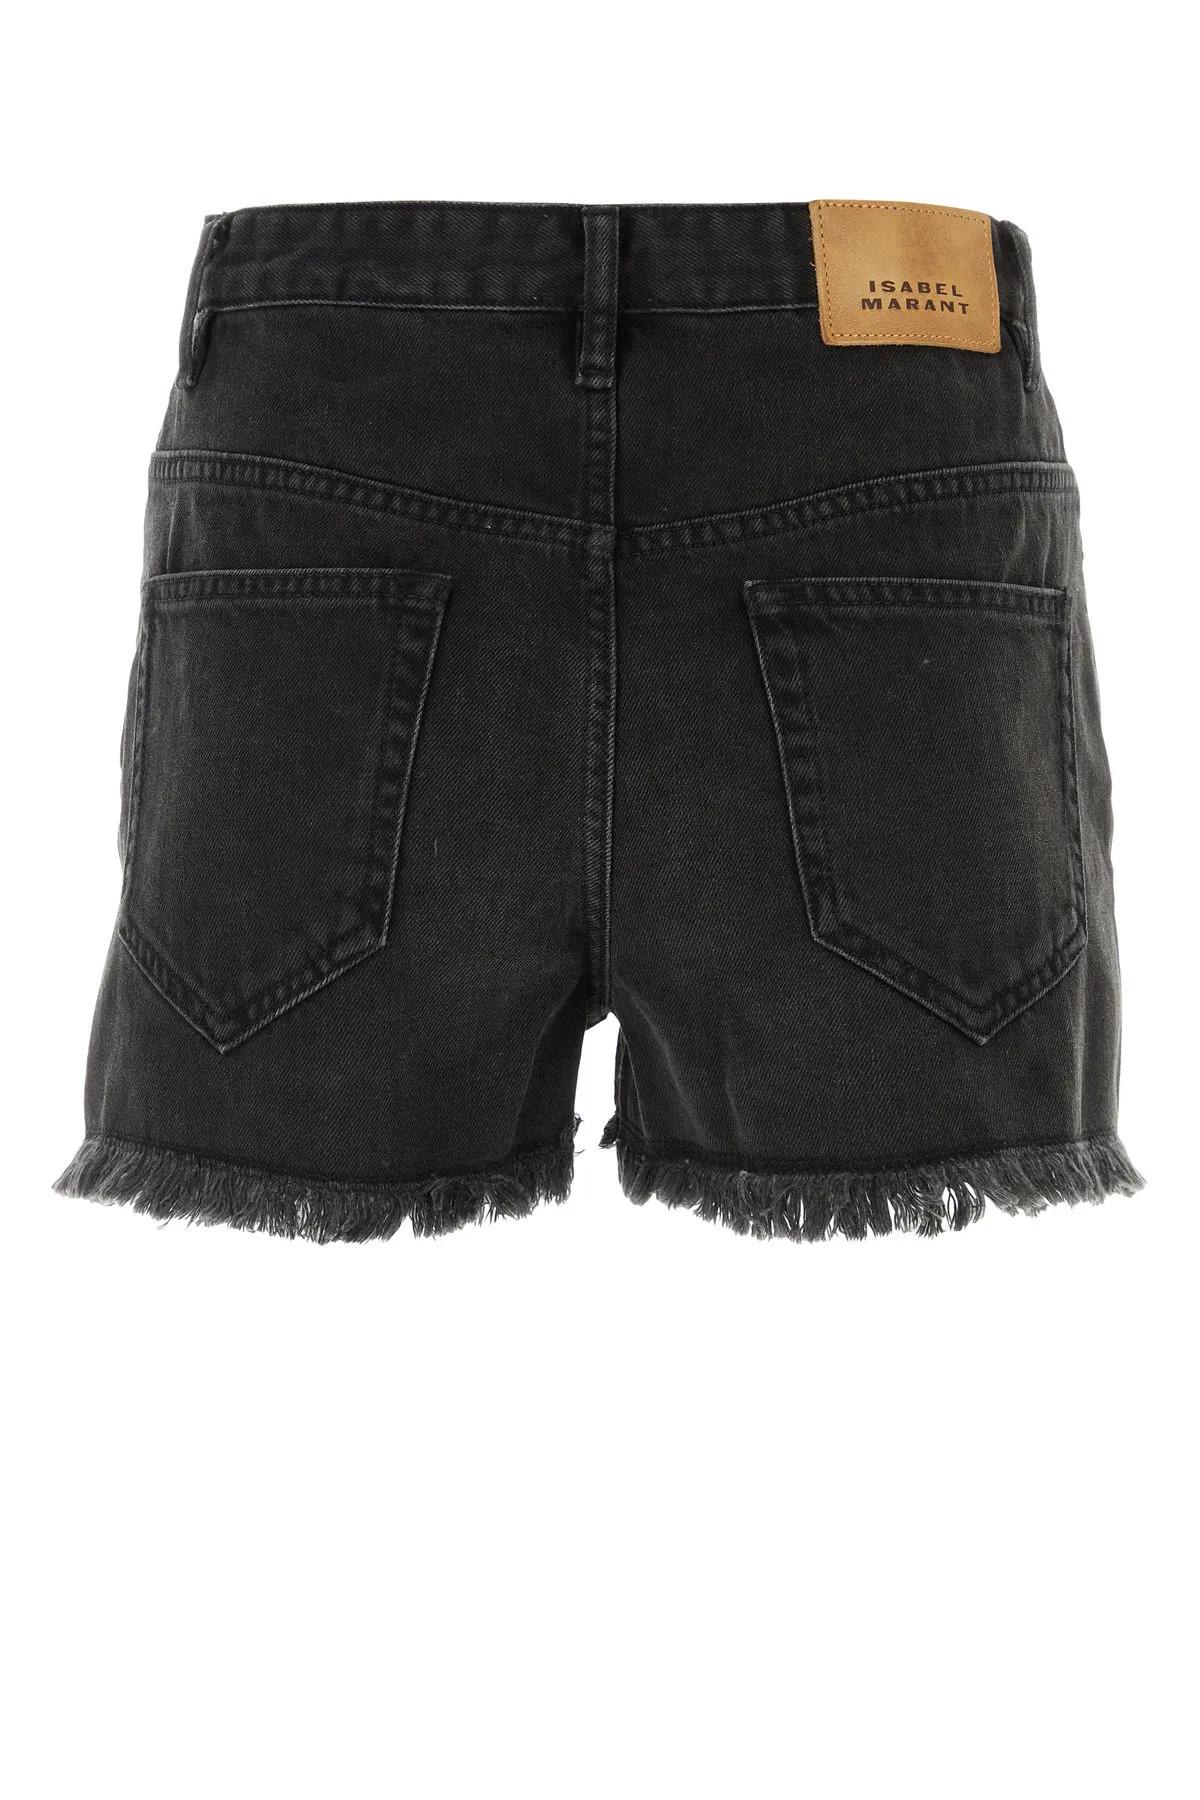 Shop Isabel Marant Black Denim Lesia Shorts